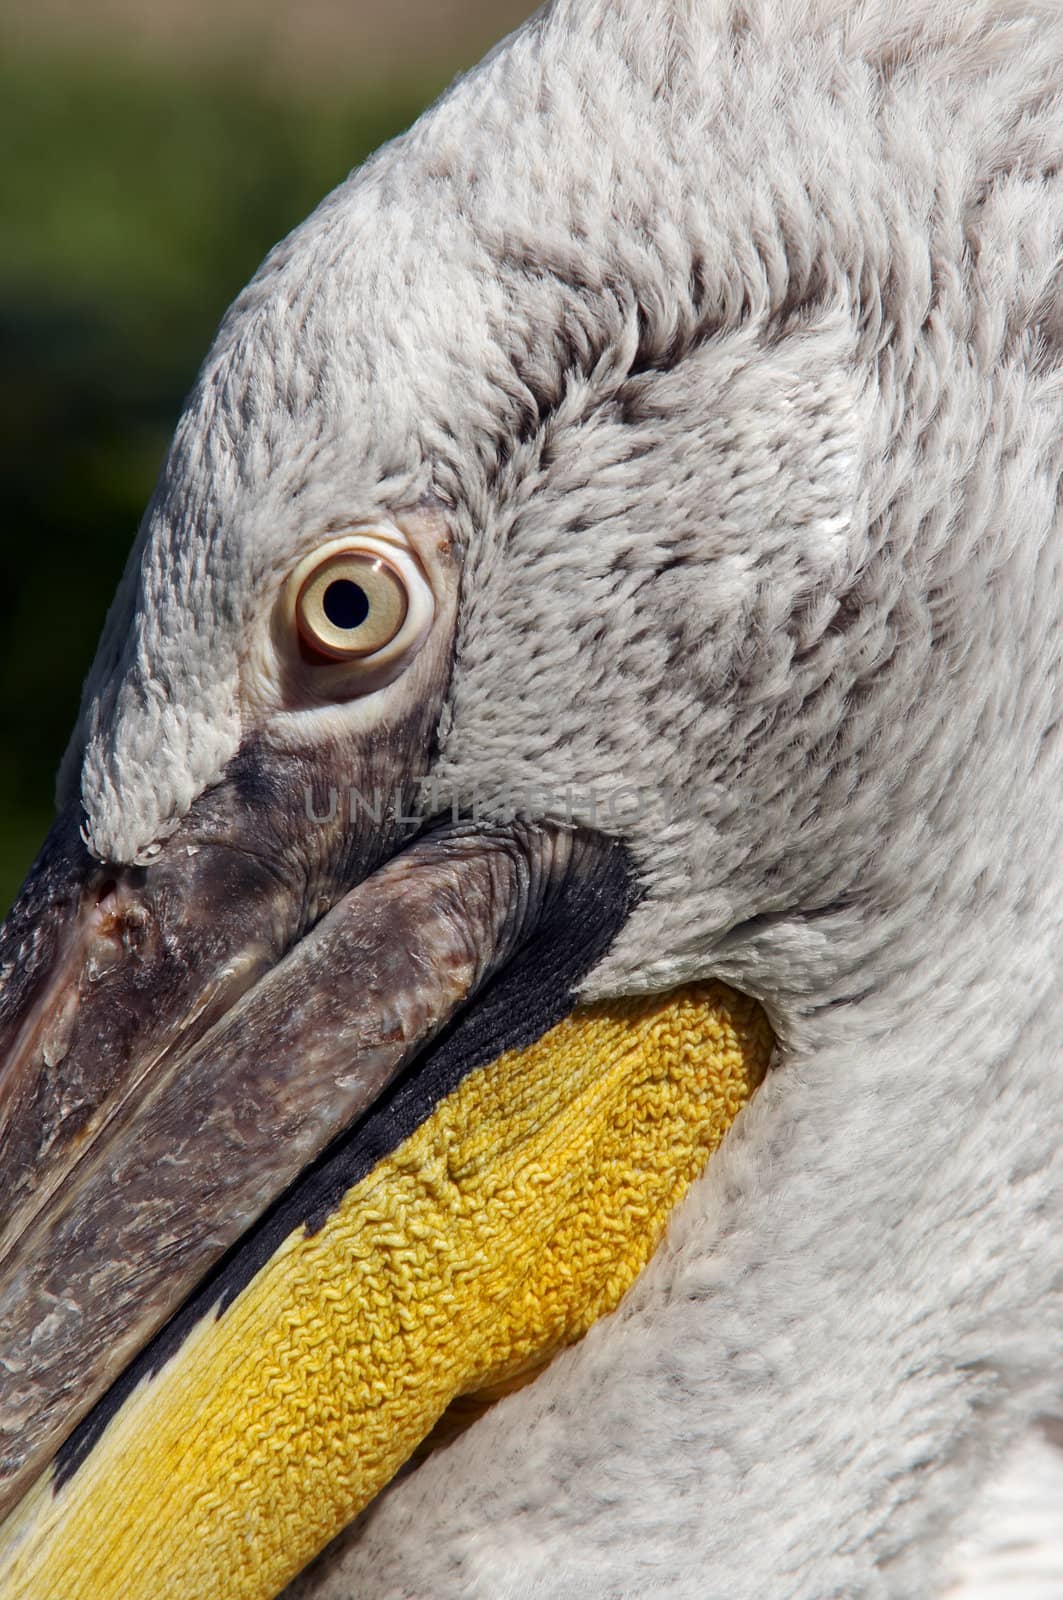 Dalmatian pelican - detail of the eye